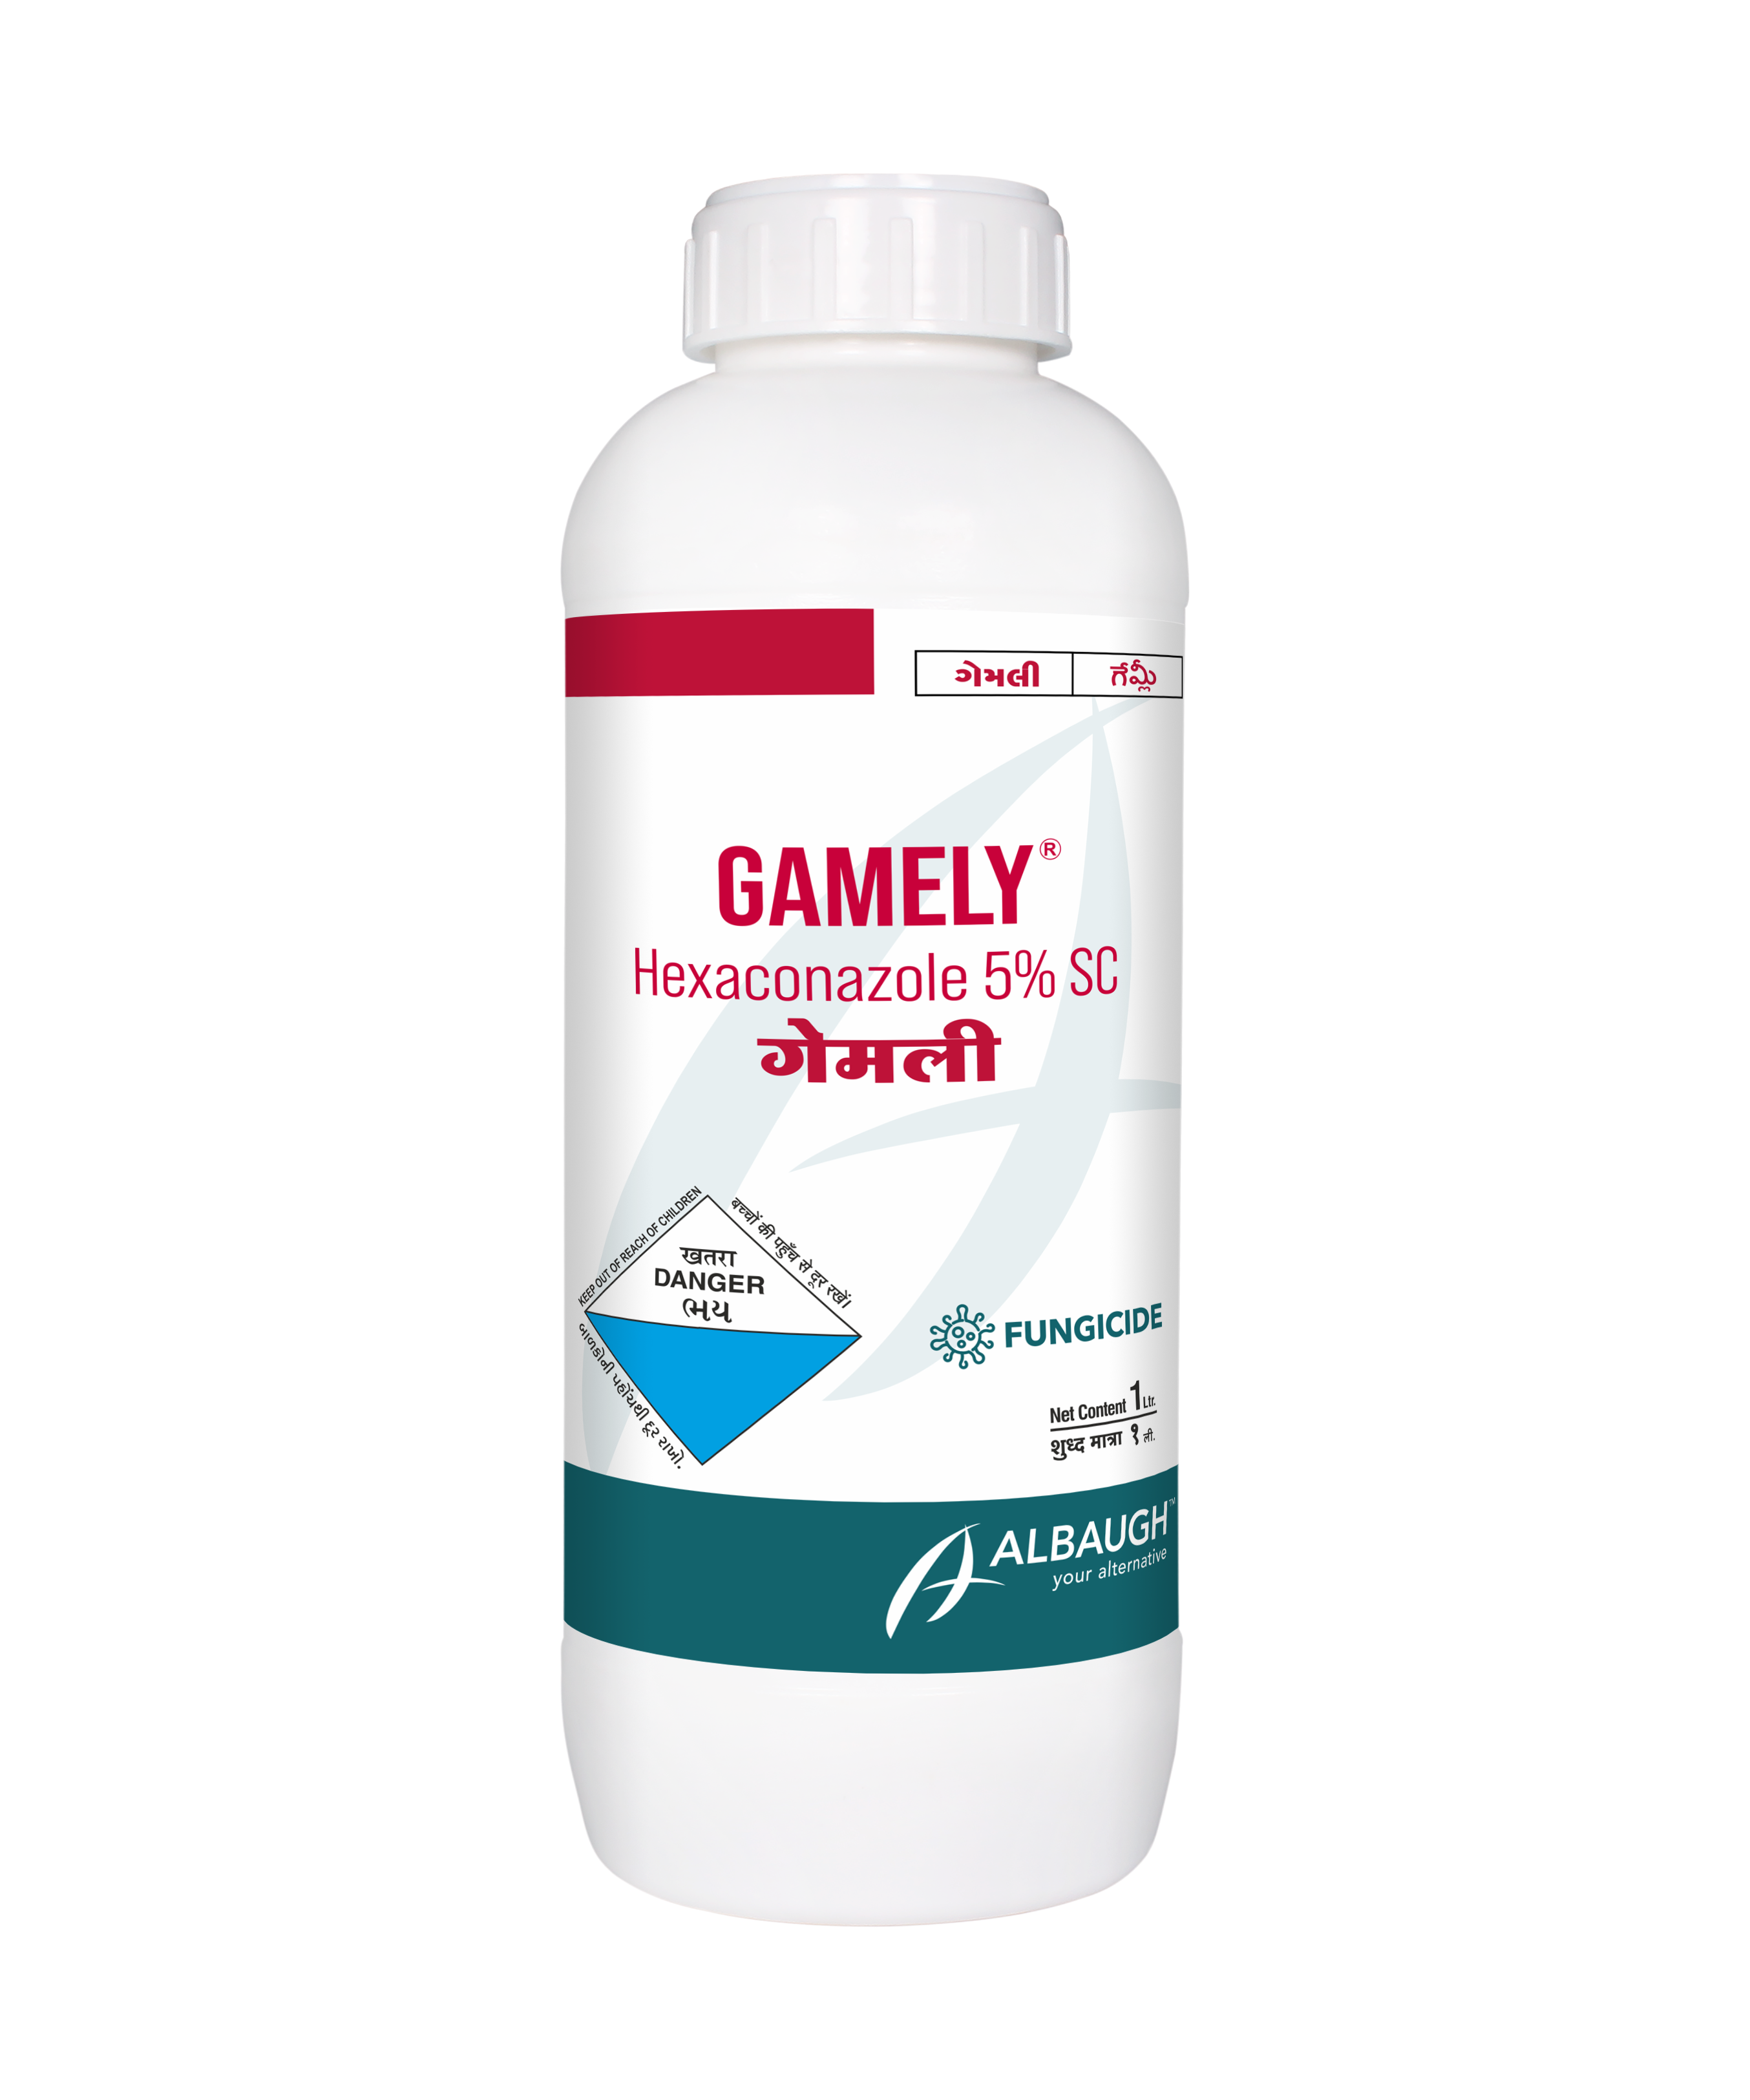 Gamely: Hexaconazole 5% SC